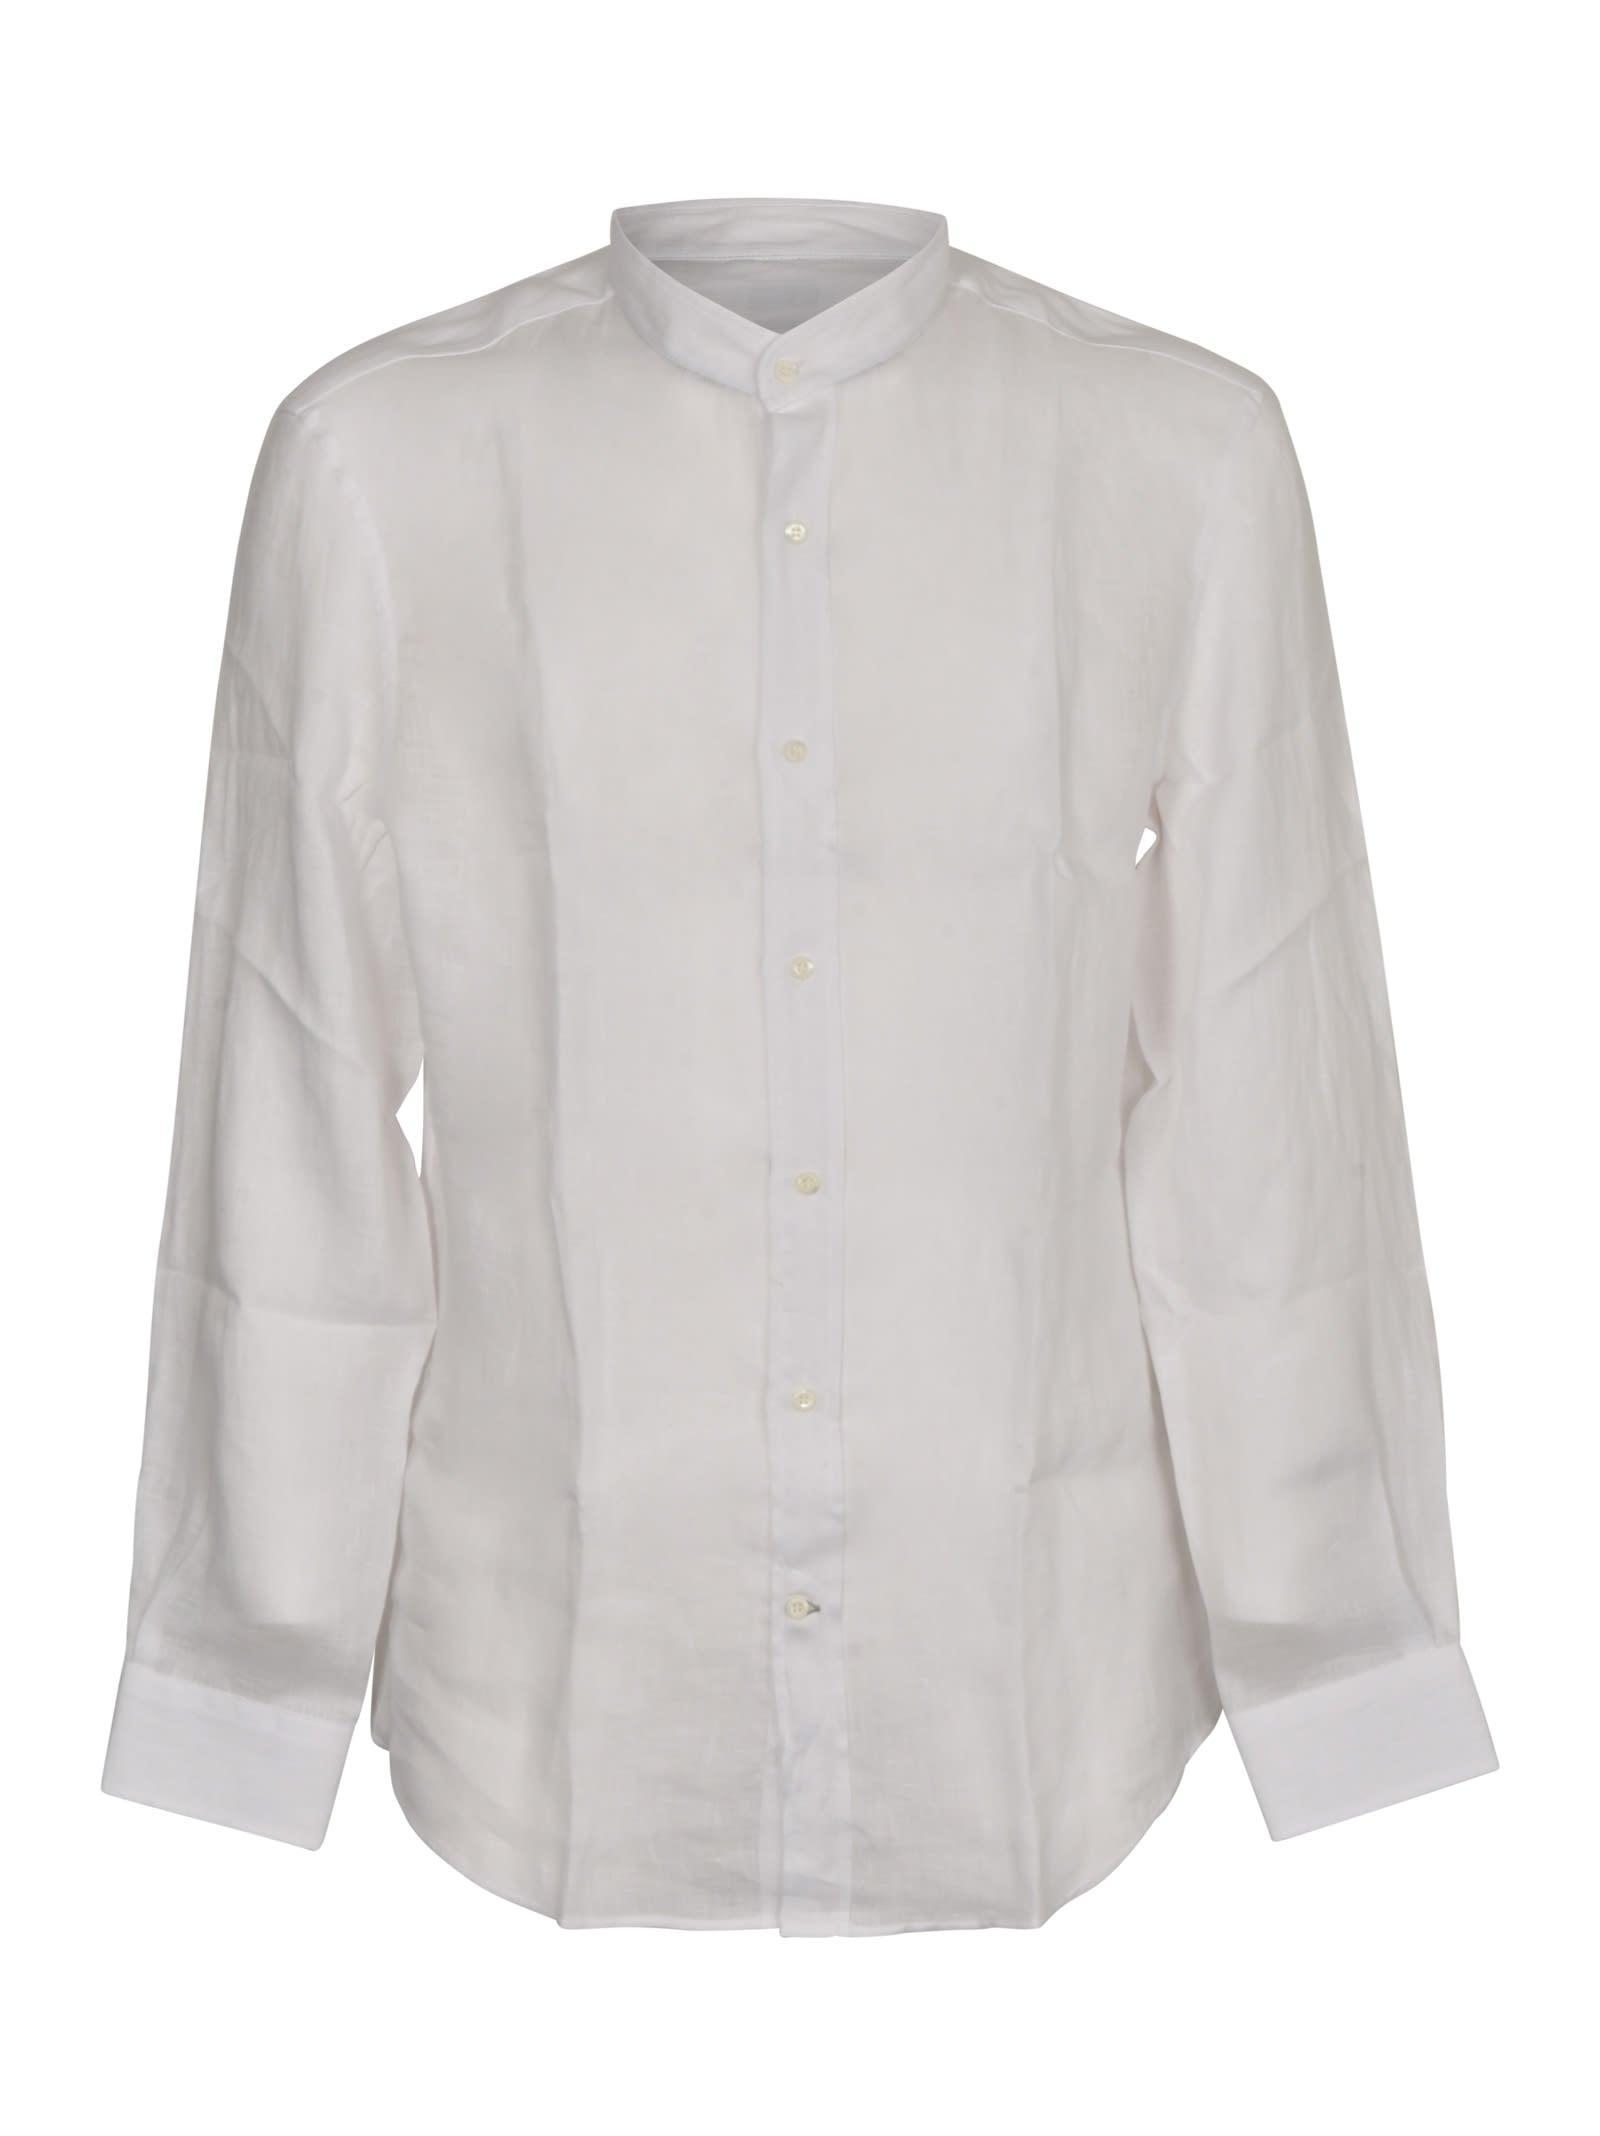 White Rounded Mandarin Collar Shirt